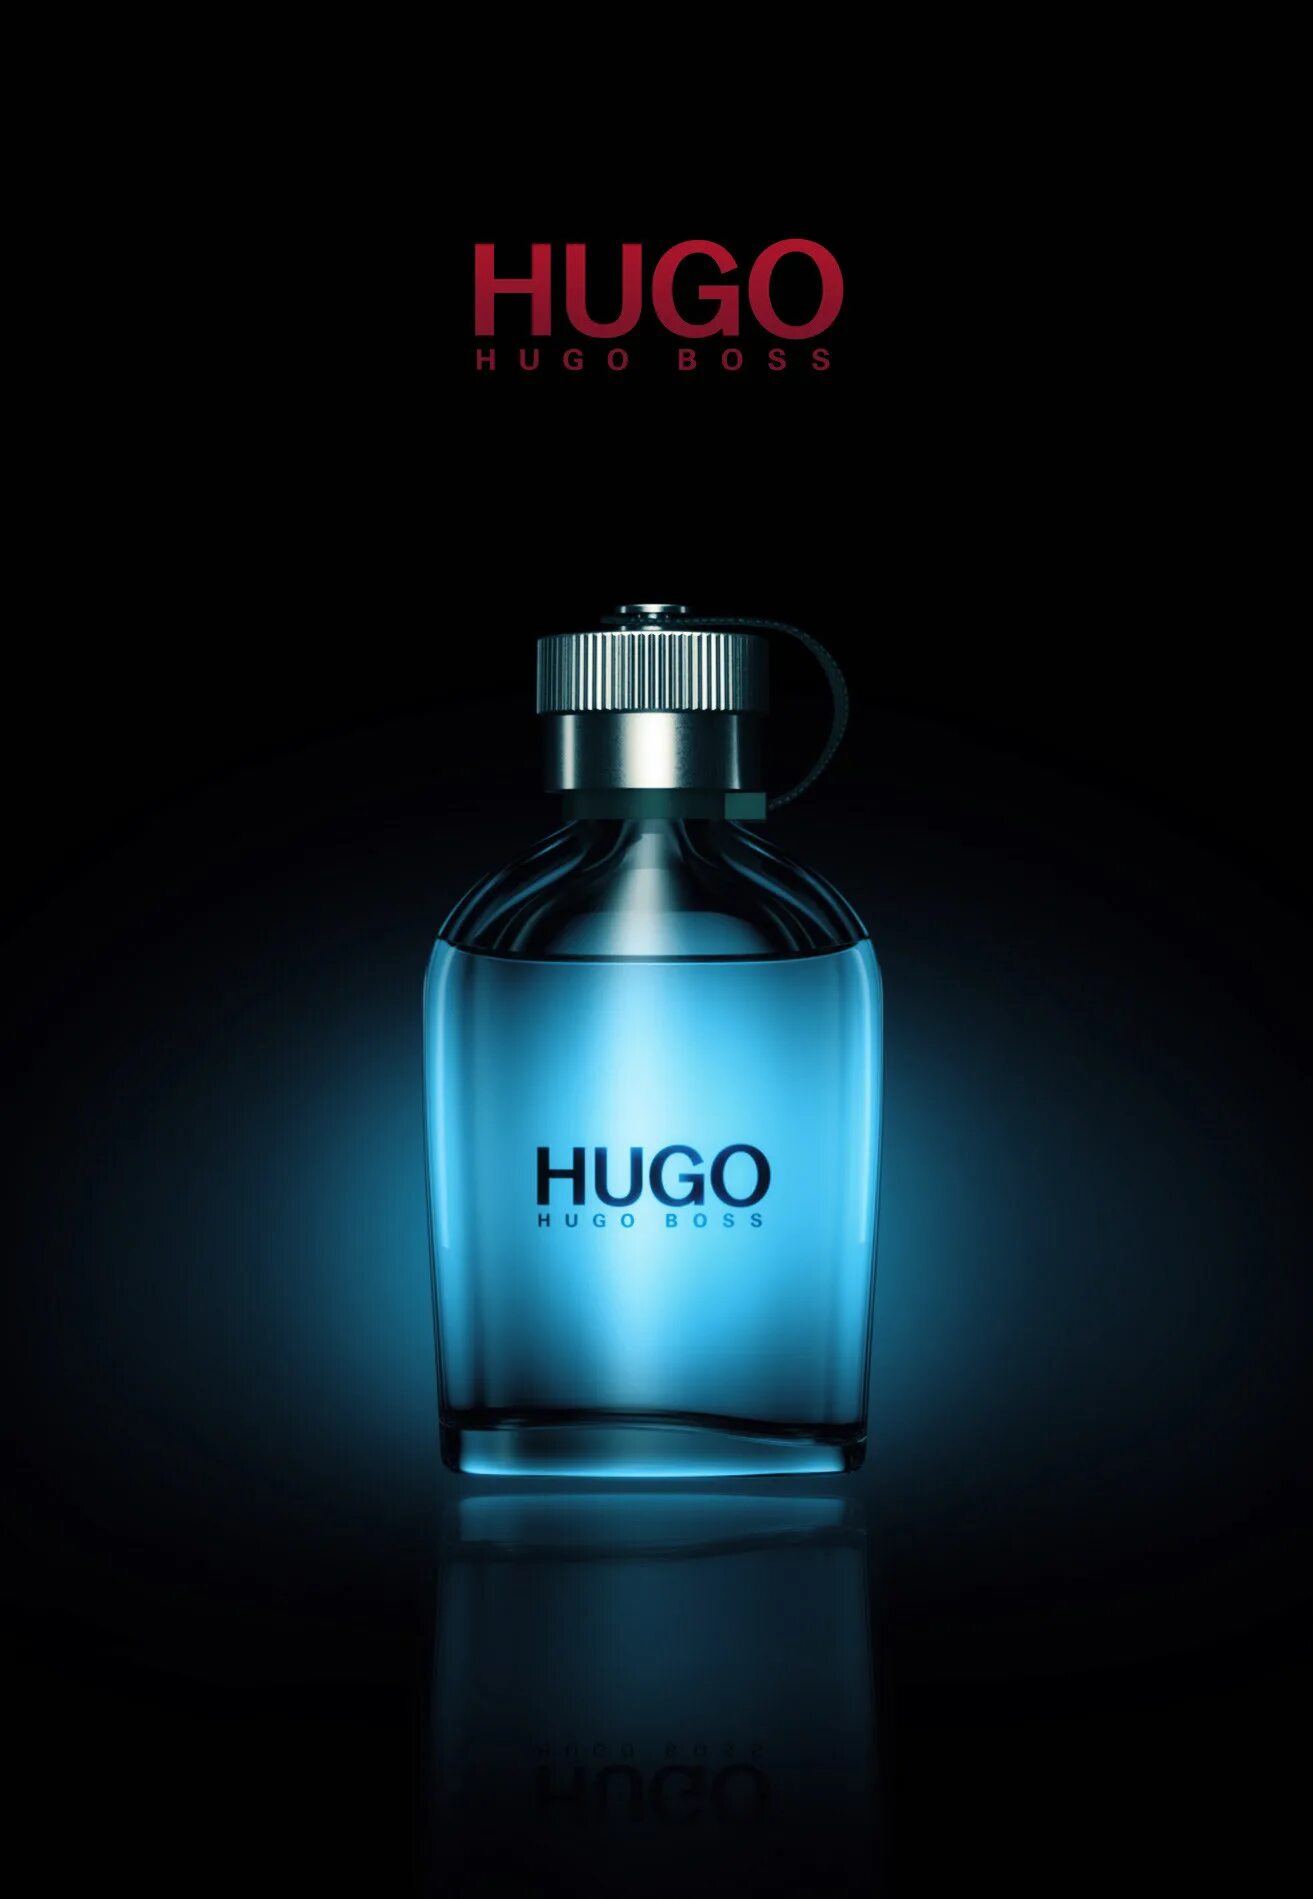 Хьюго босс. Ad Doss Hugo Boss. Хуго босс 0769. Hugo Boss la Parfum. Хуго босс сайт